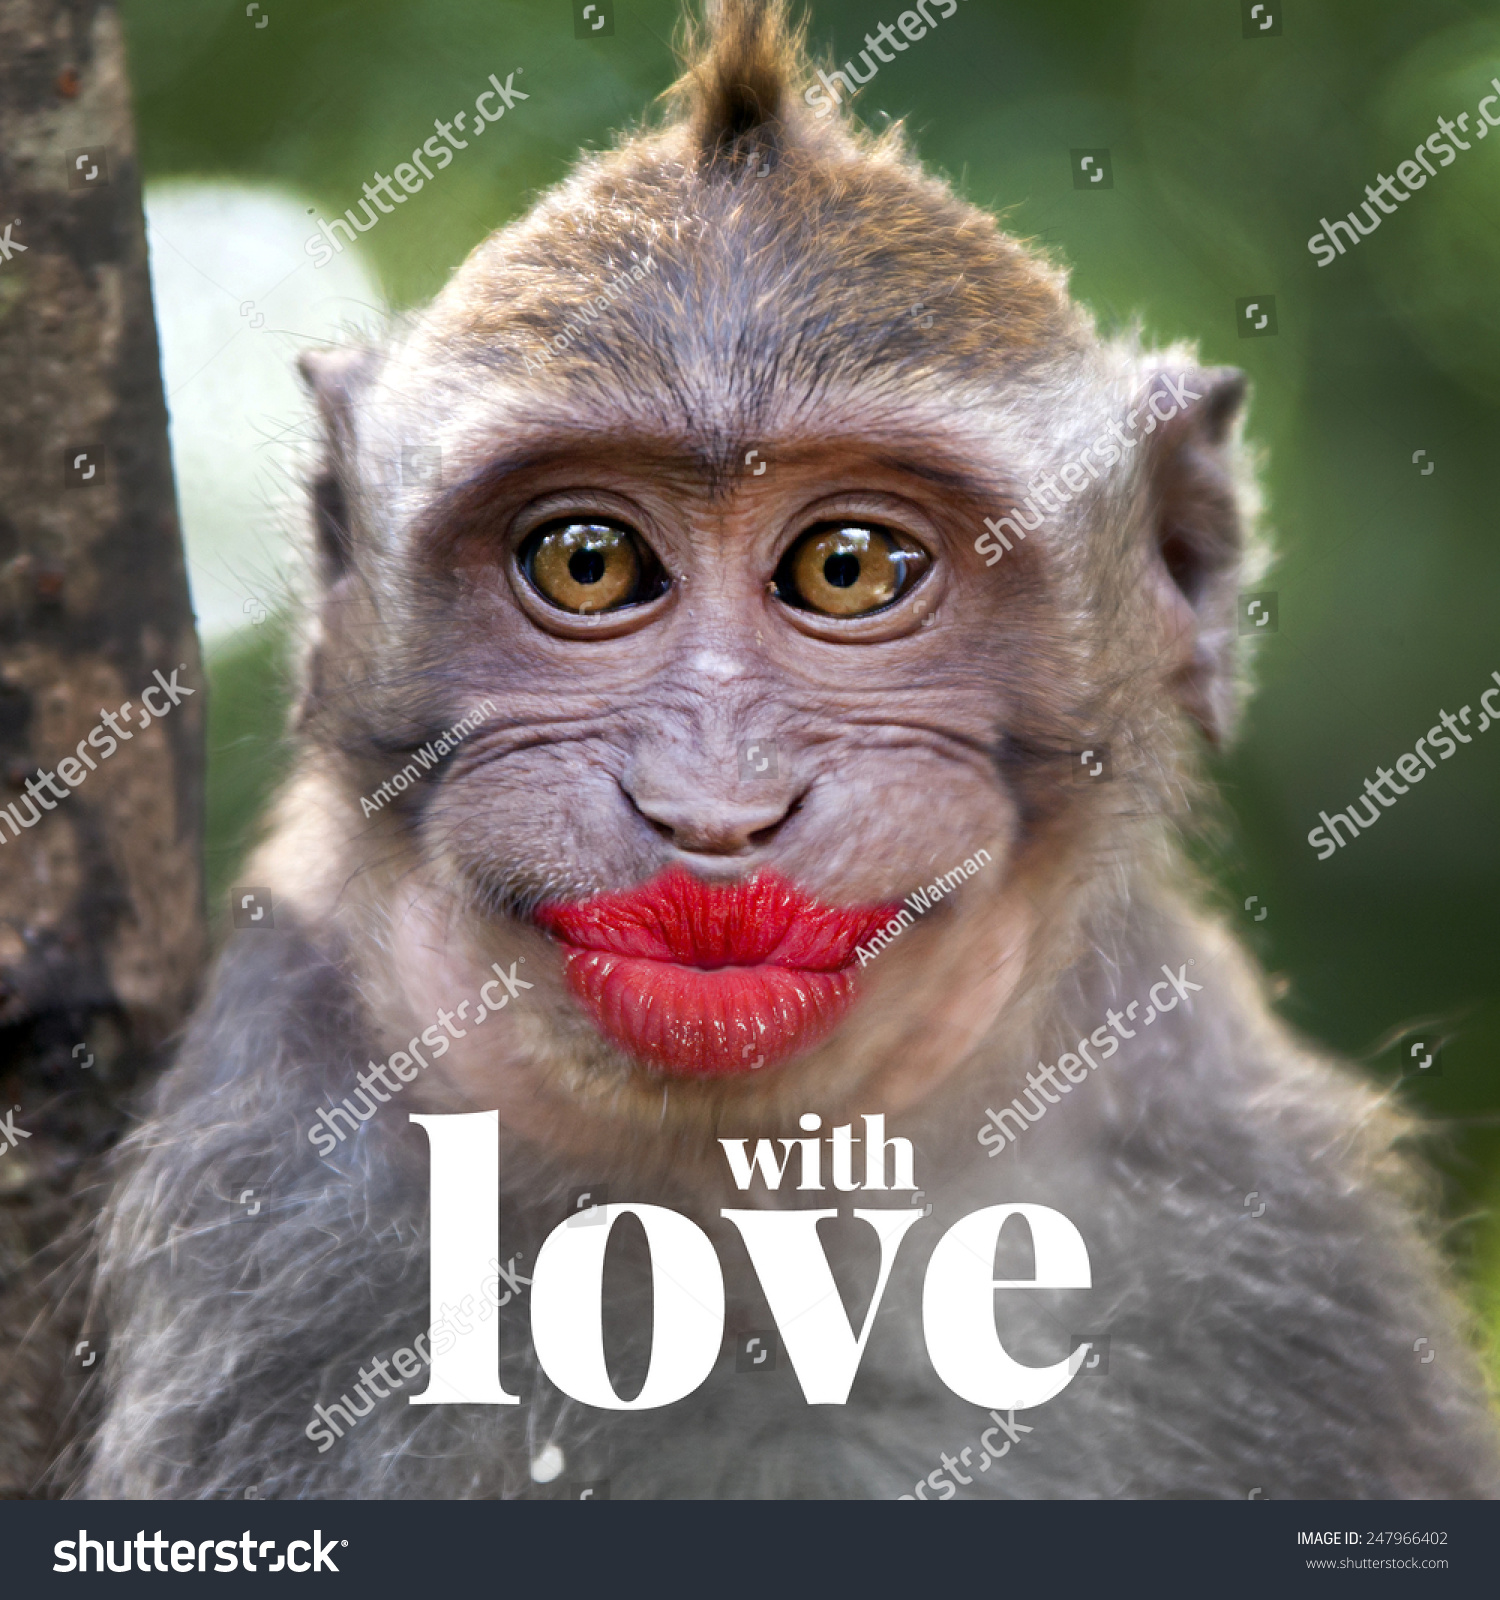 Image result for funny monkey